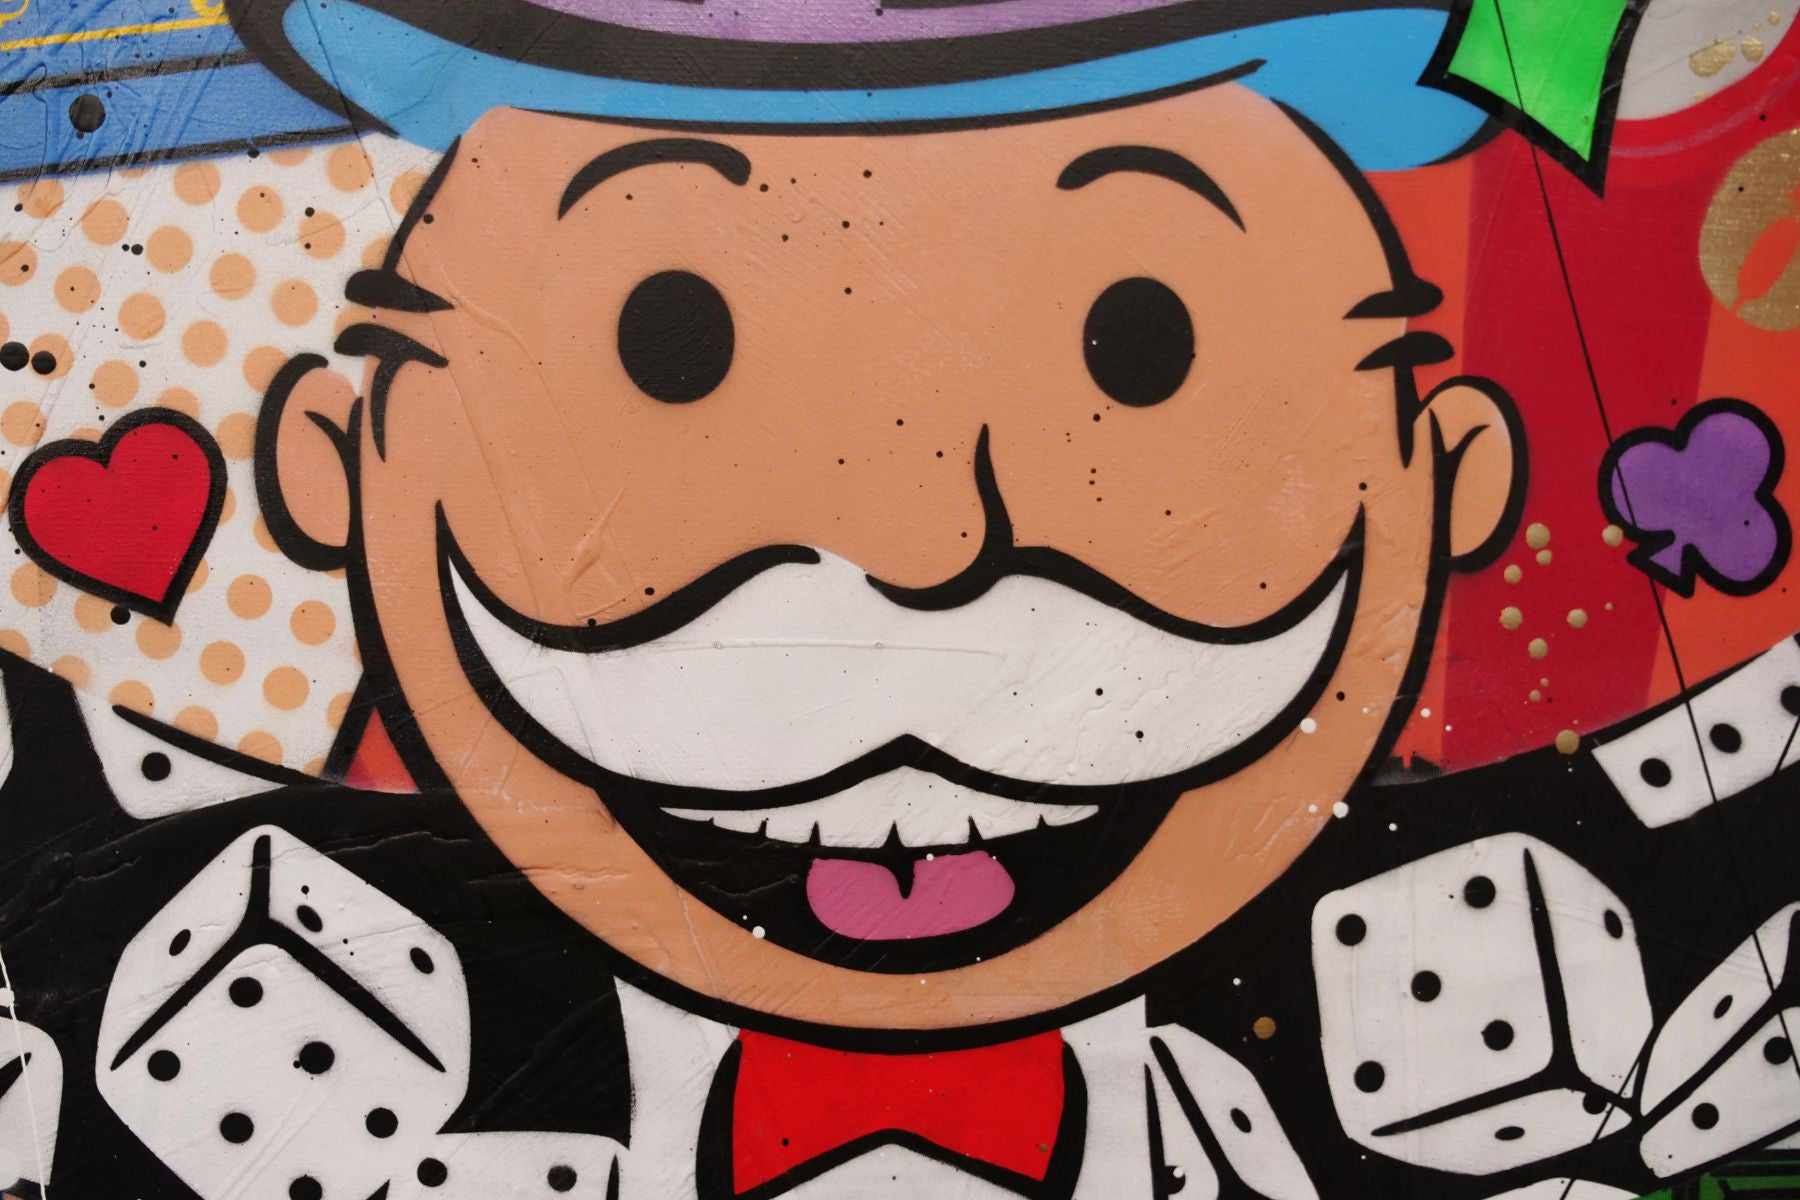 The Monopoly Gambler 250cm x 150cm Monopoly Man Textured Urban Pop Art Painting (SOLD)